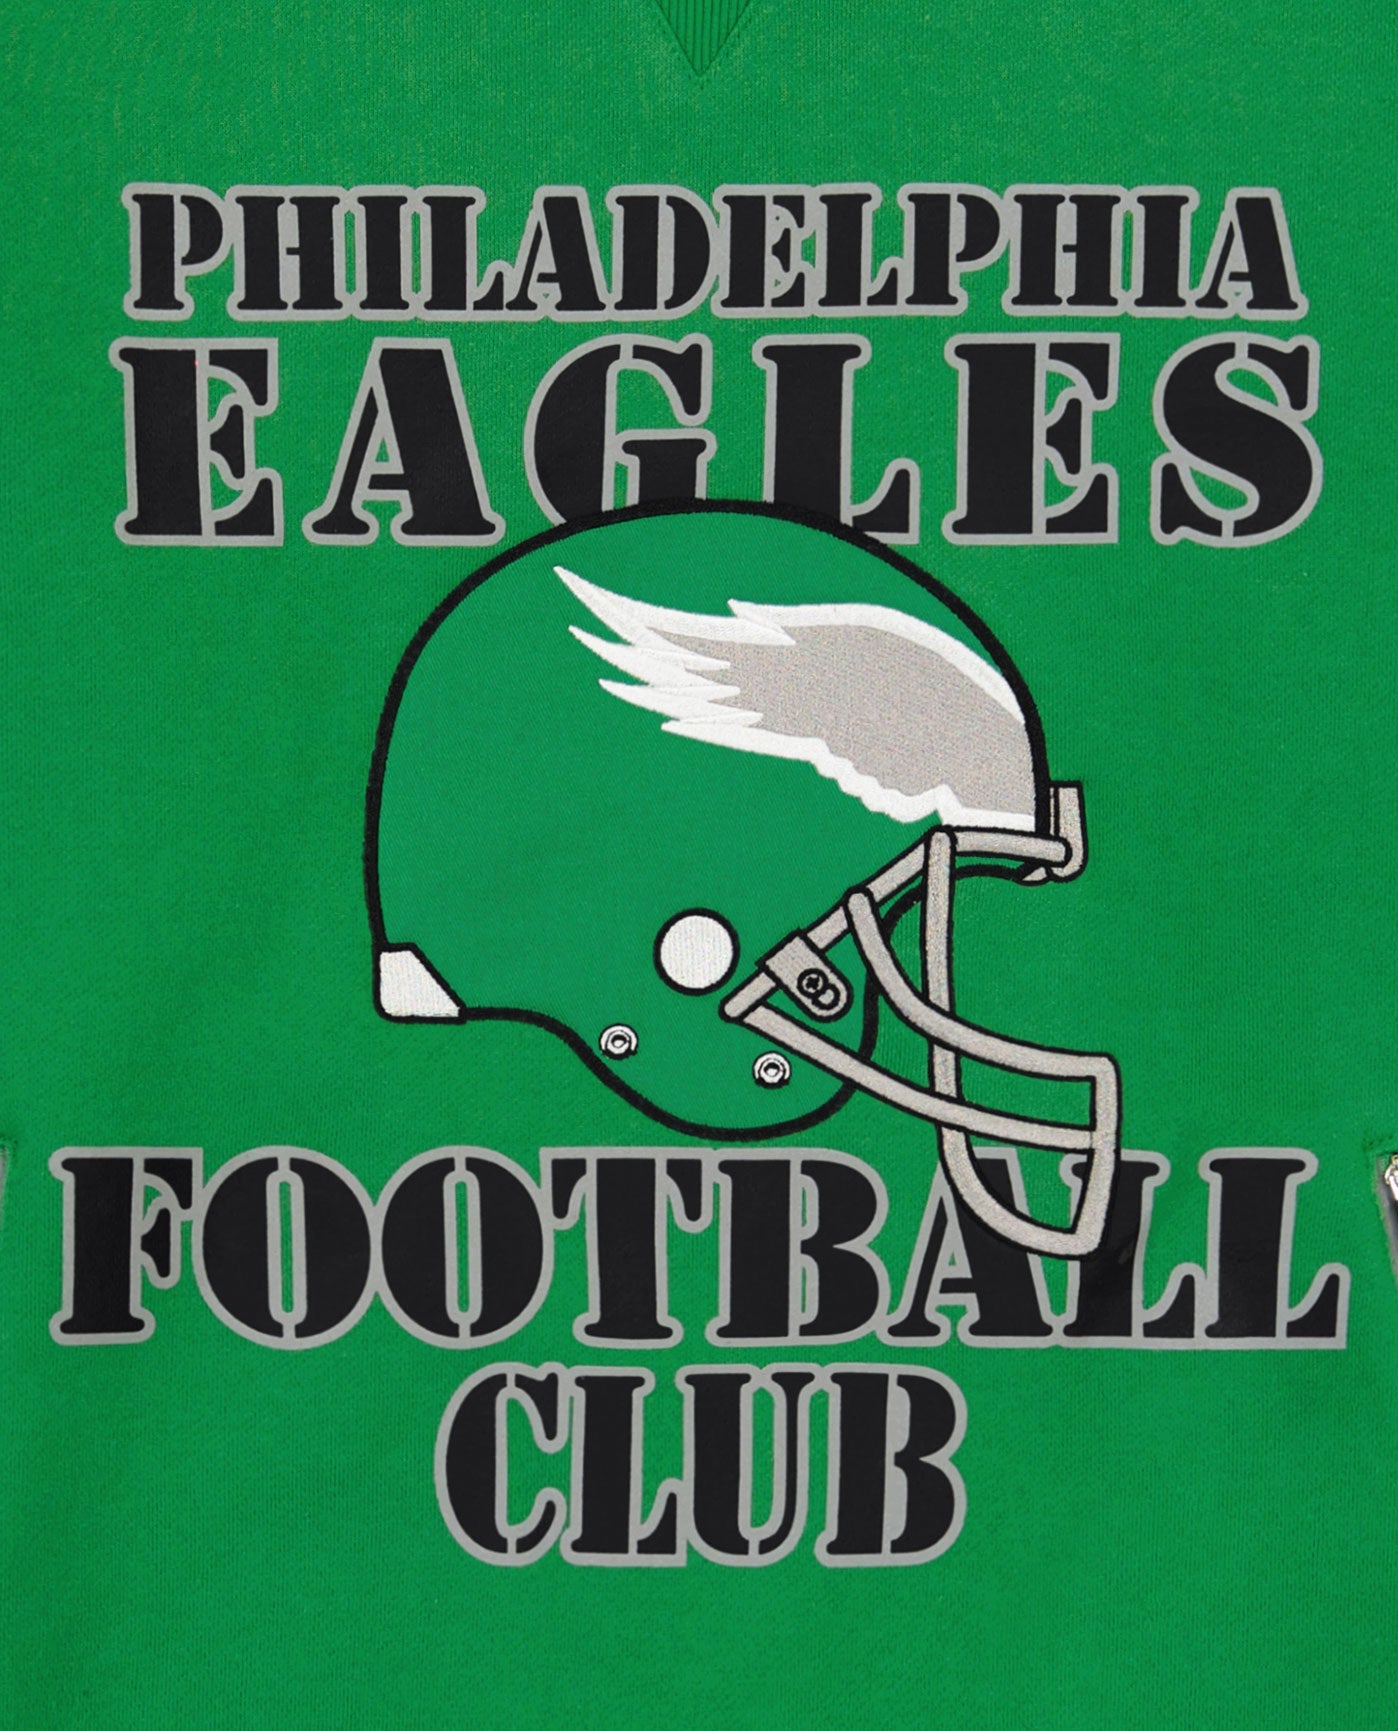 PHILADELPHIA EAGLES writing and helmet logo front | Eagles Kelly Green